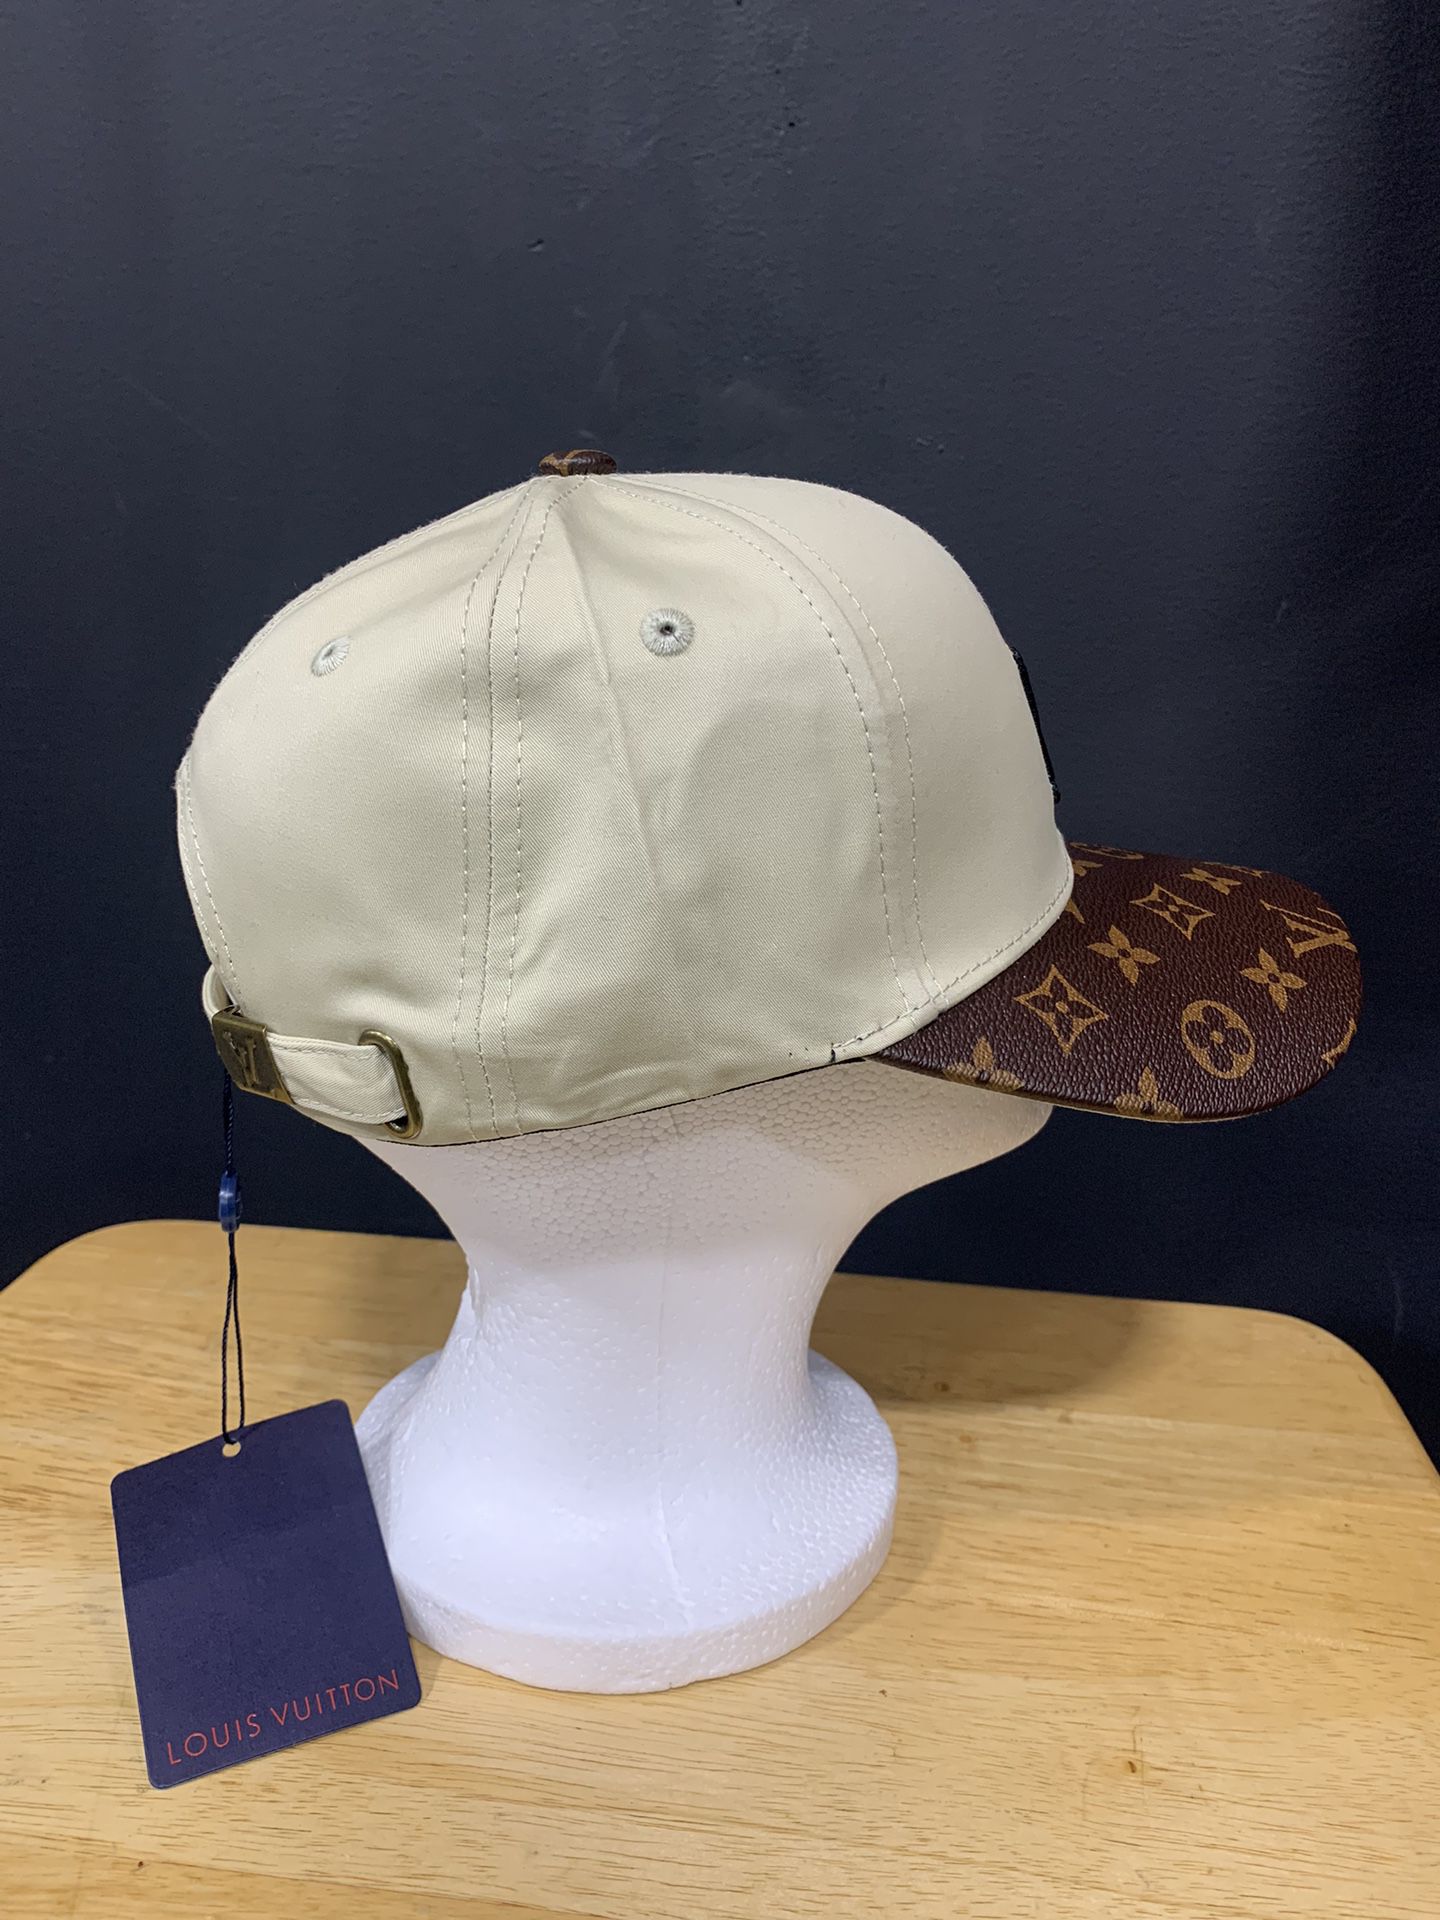 LV - Louis Vuitton Monogram Hat - Authentic for Sale in Lenexa, KS - OfferUp